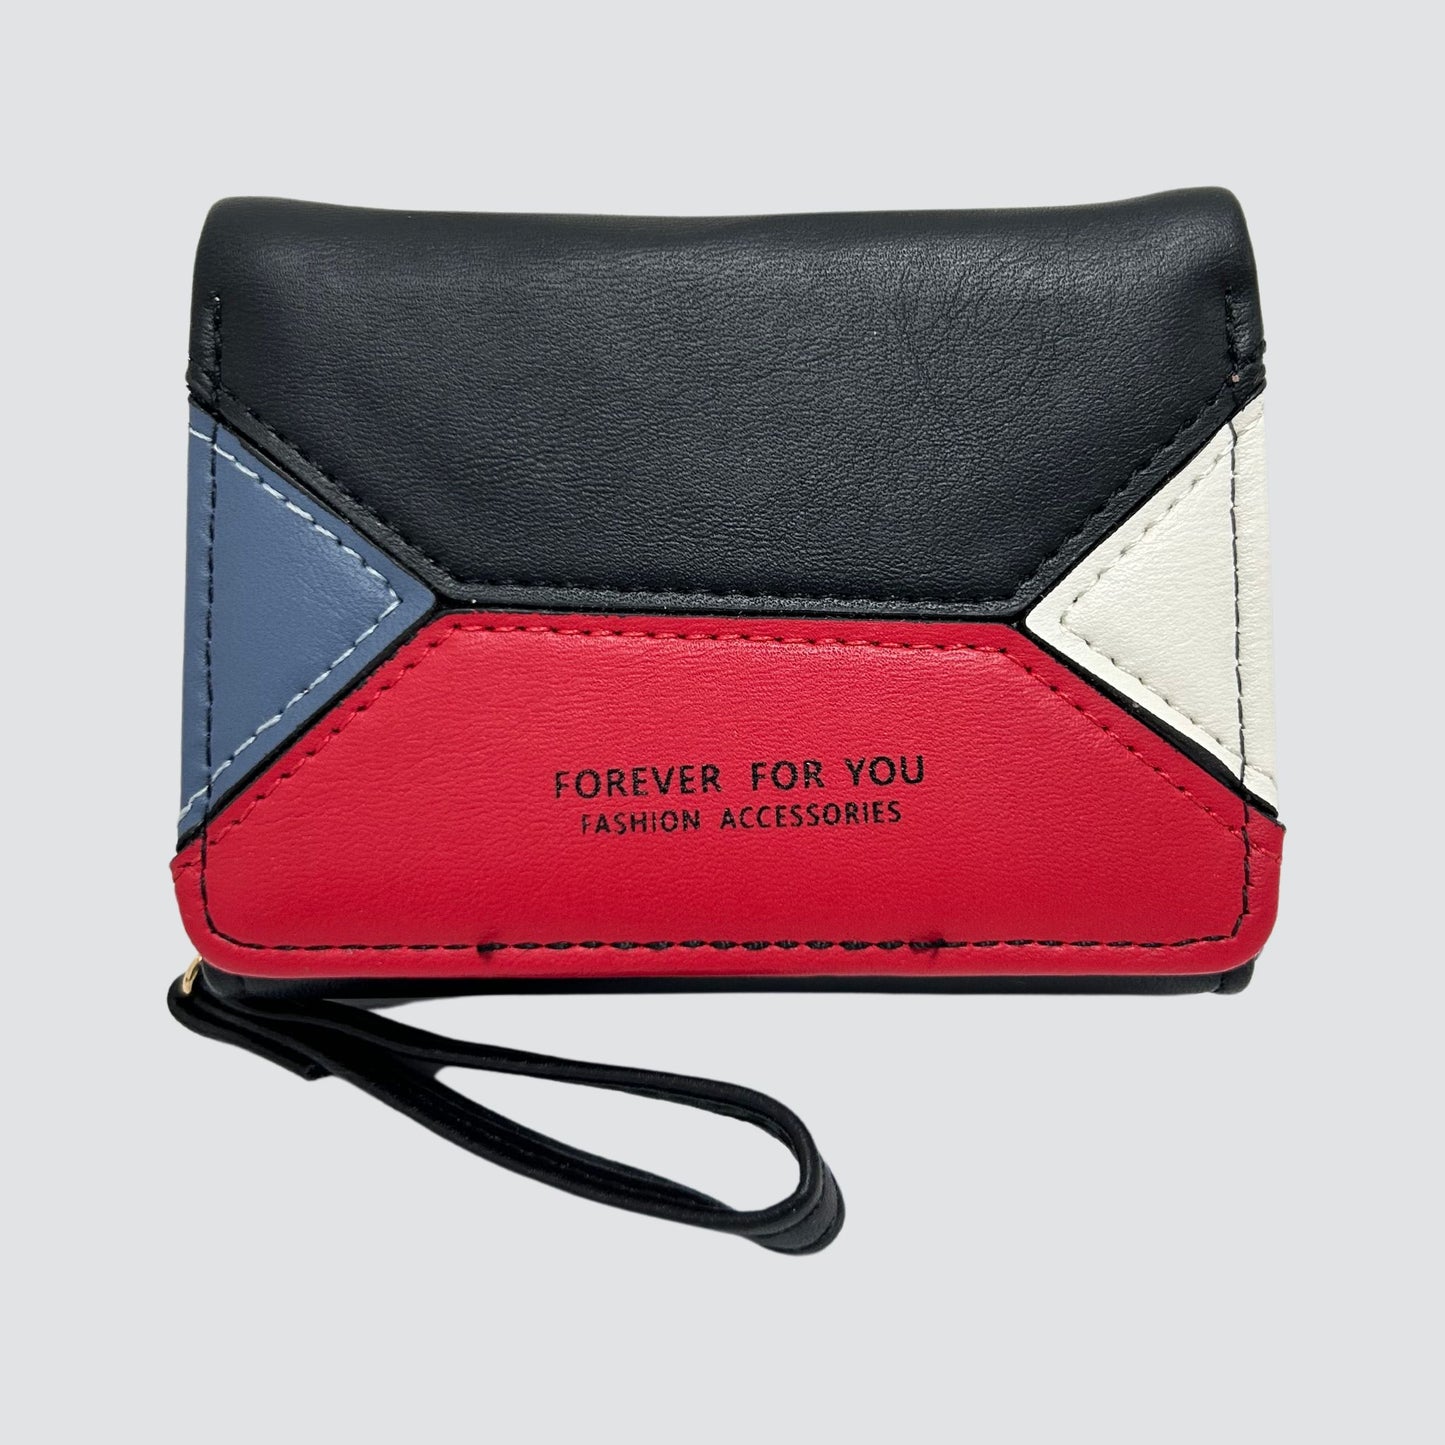 S3377 Mini Folding PU Leather Wallet